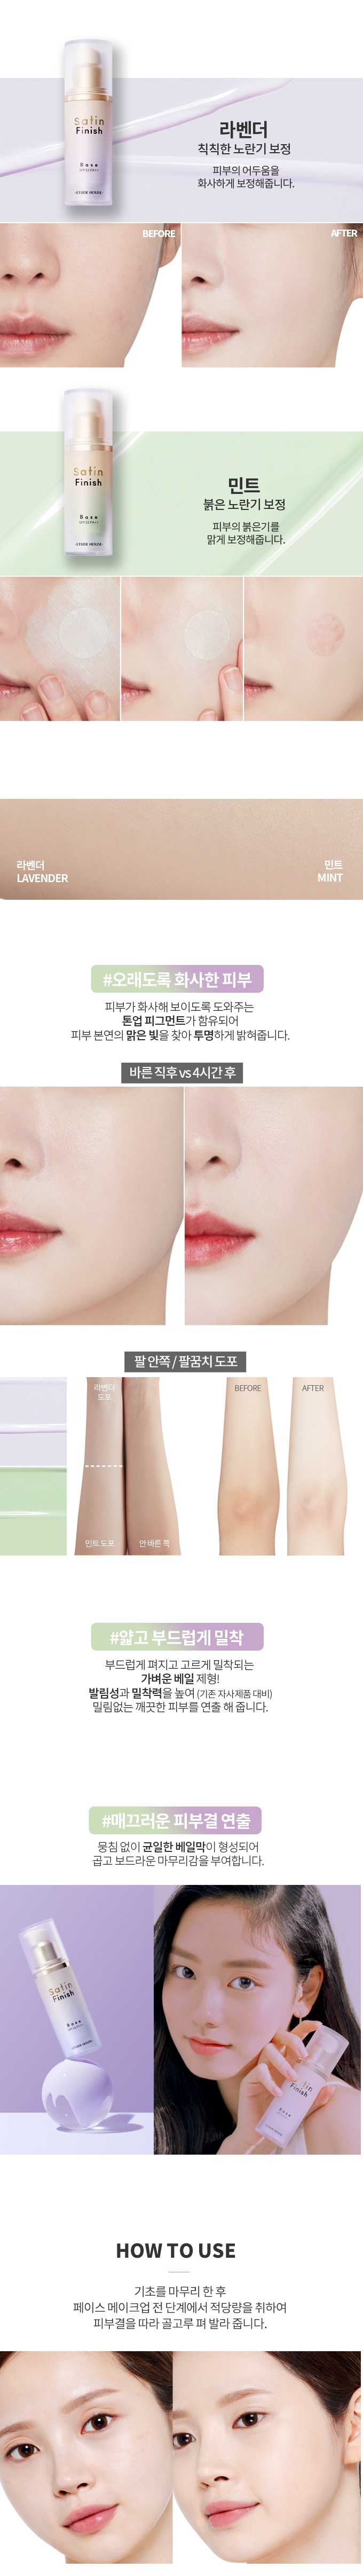 Etude House Satin Finish korean skincare product online shop malaysia China taiwan2